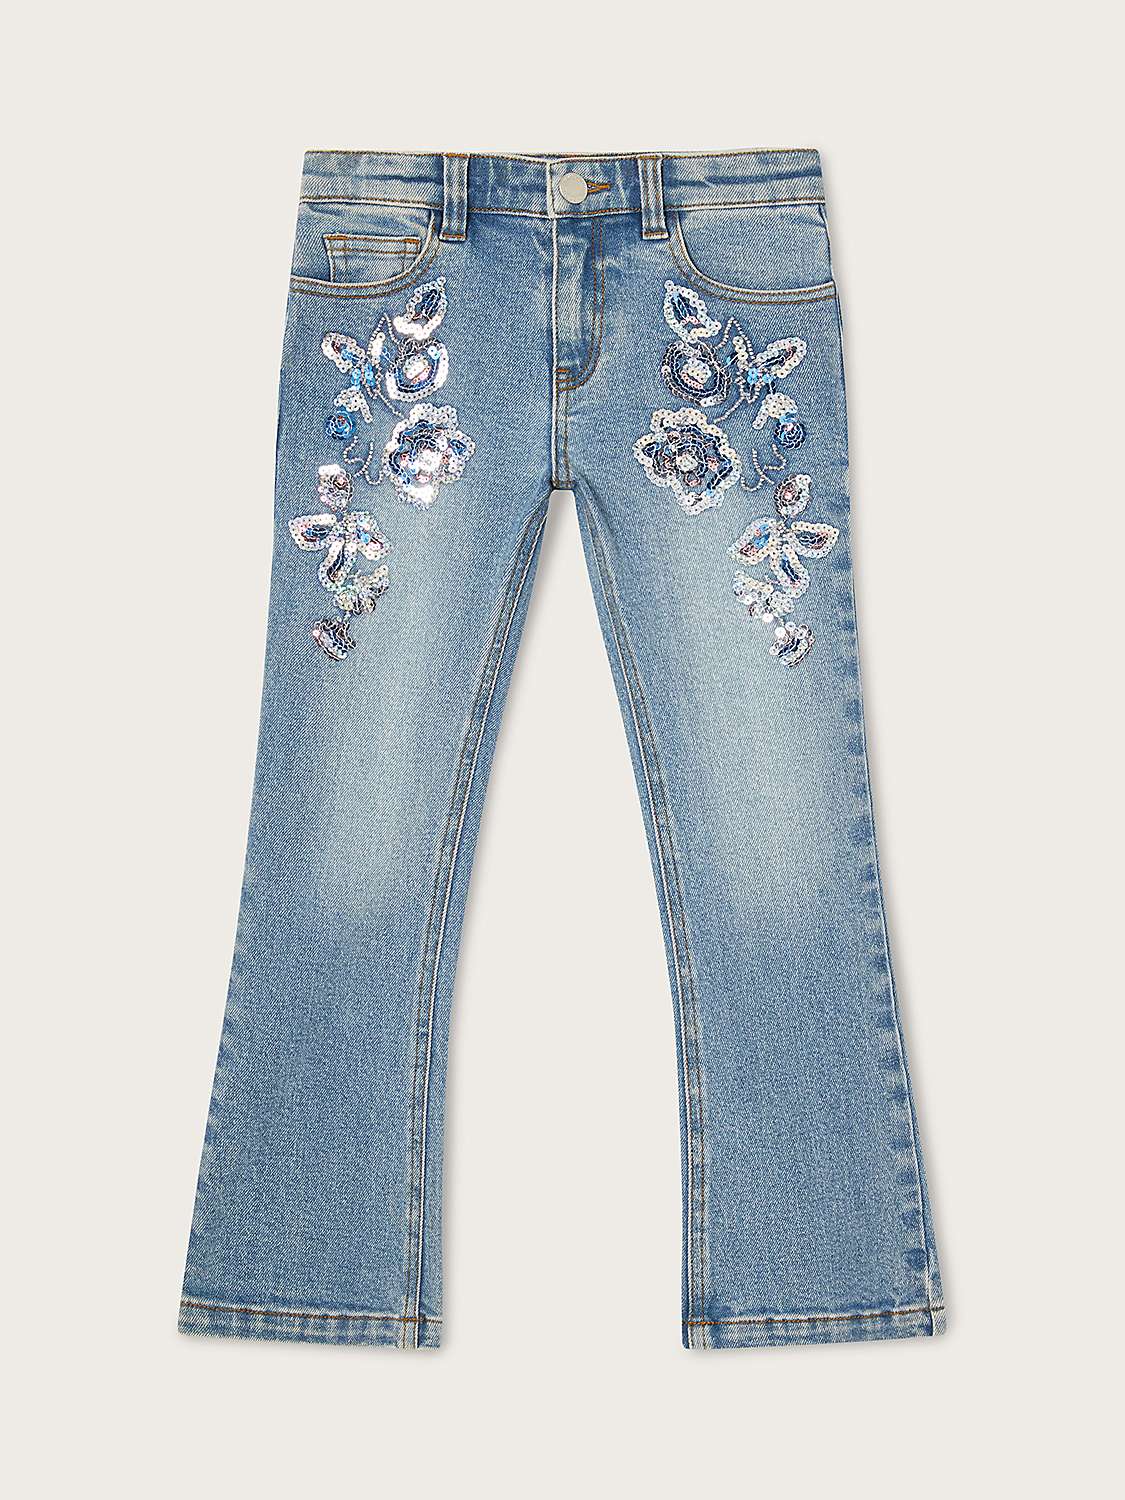 Buy Monsoon Kids' Sequin Floral Flared Jeans, Blue Online at johnlewis.com